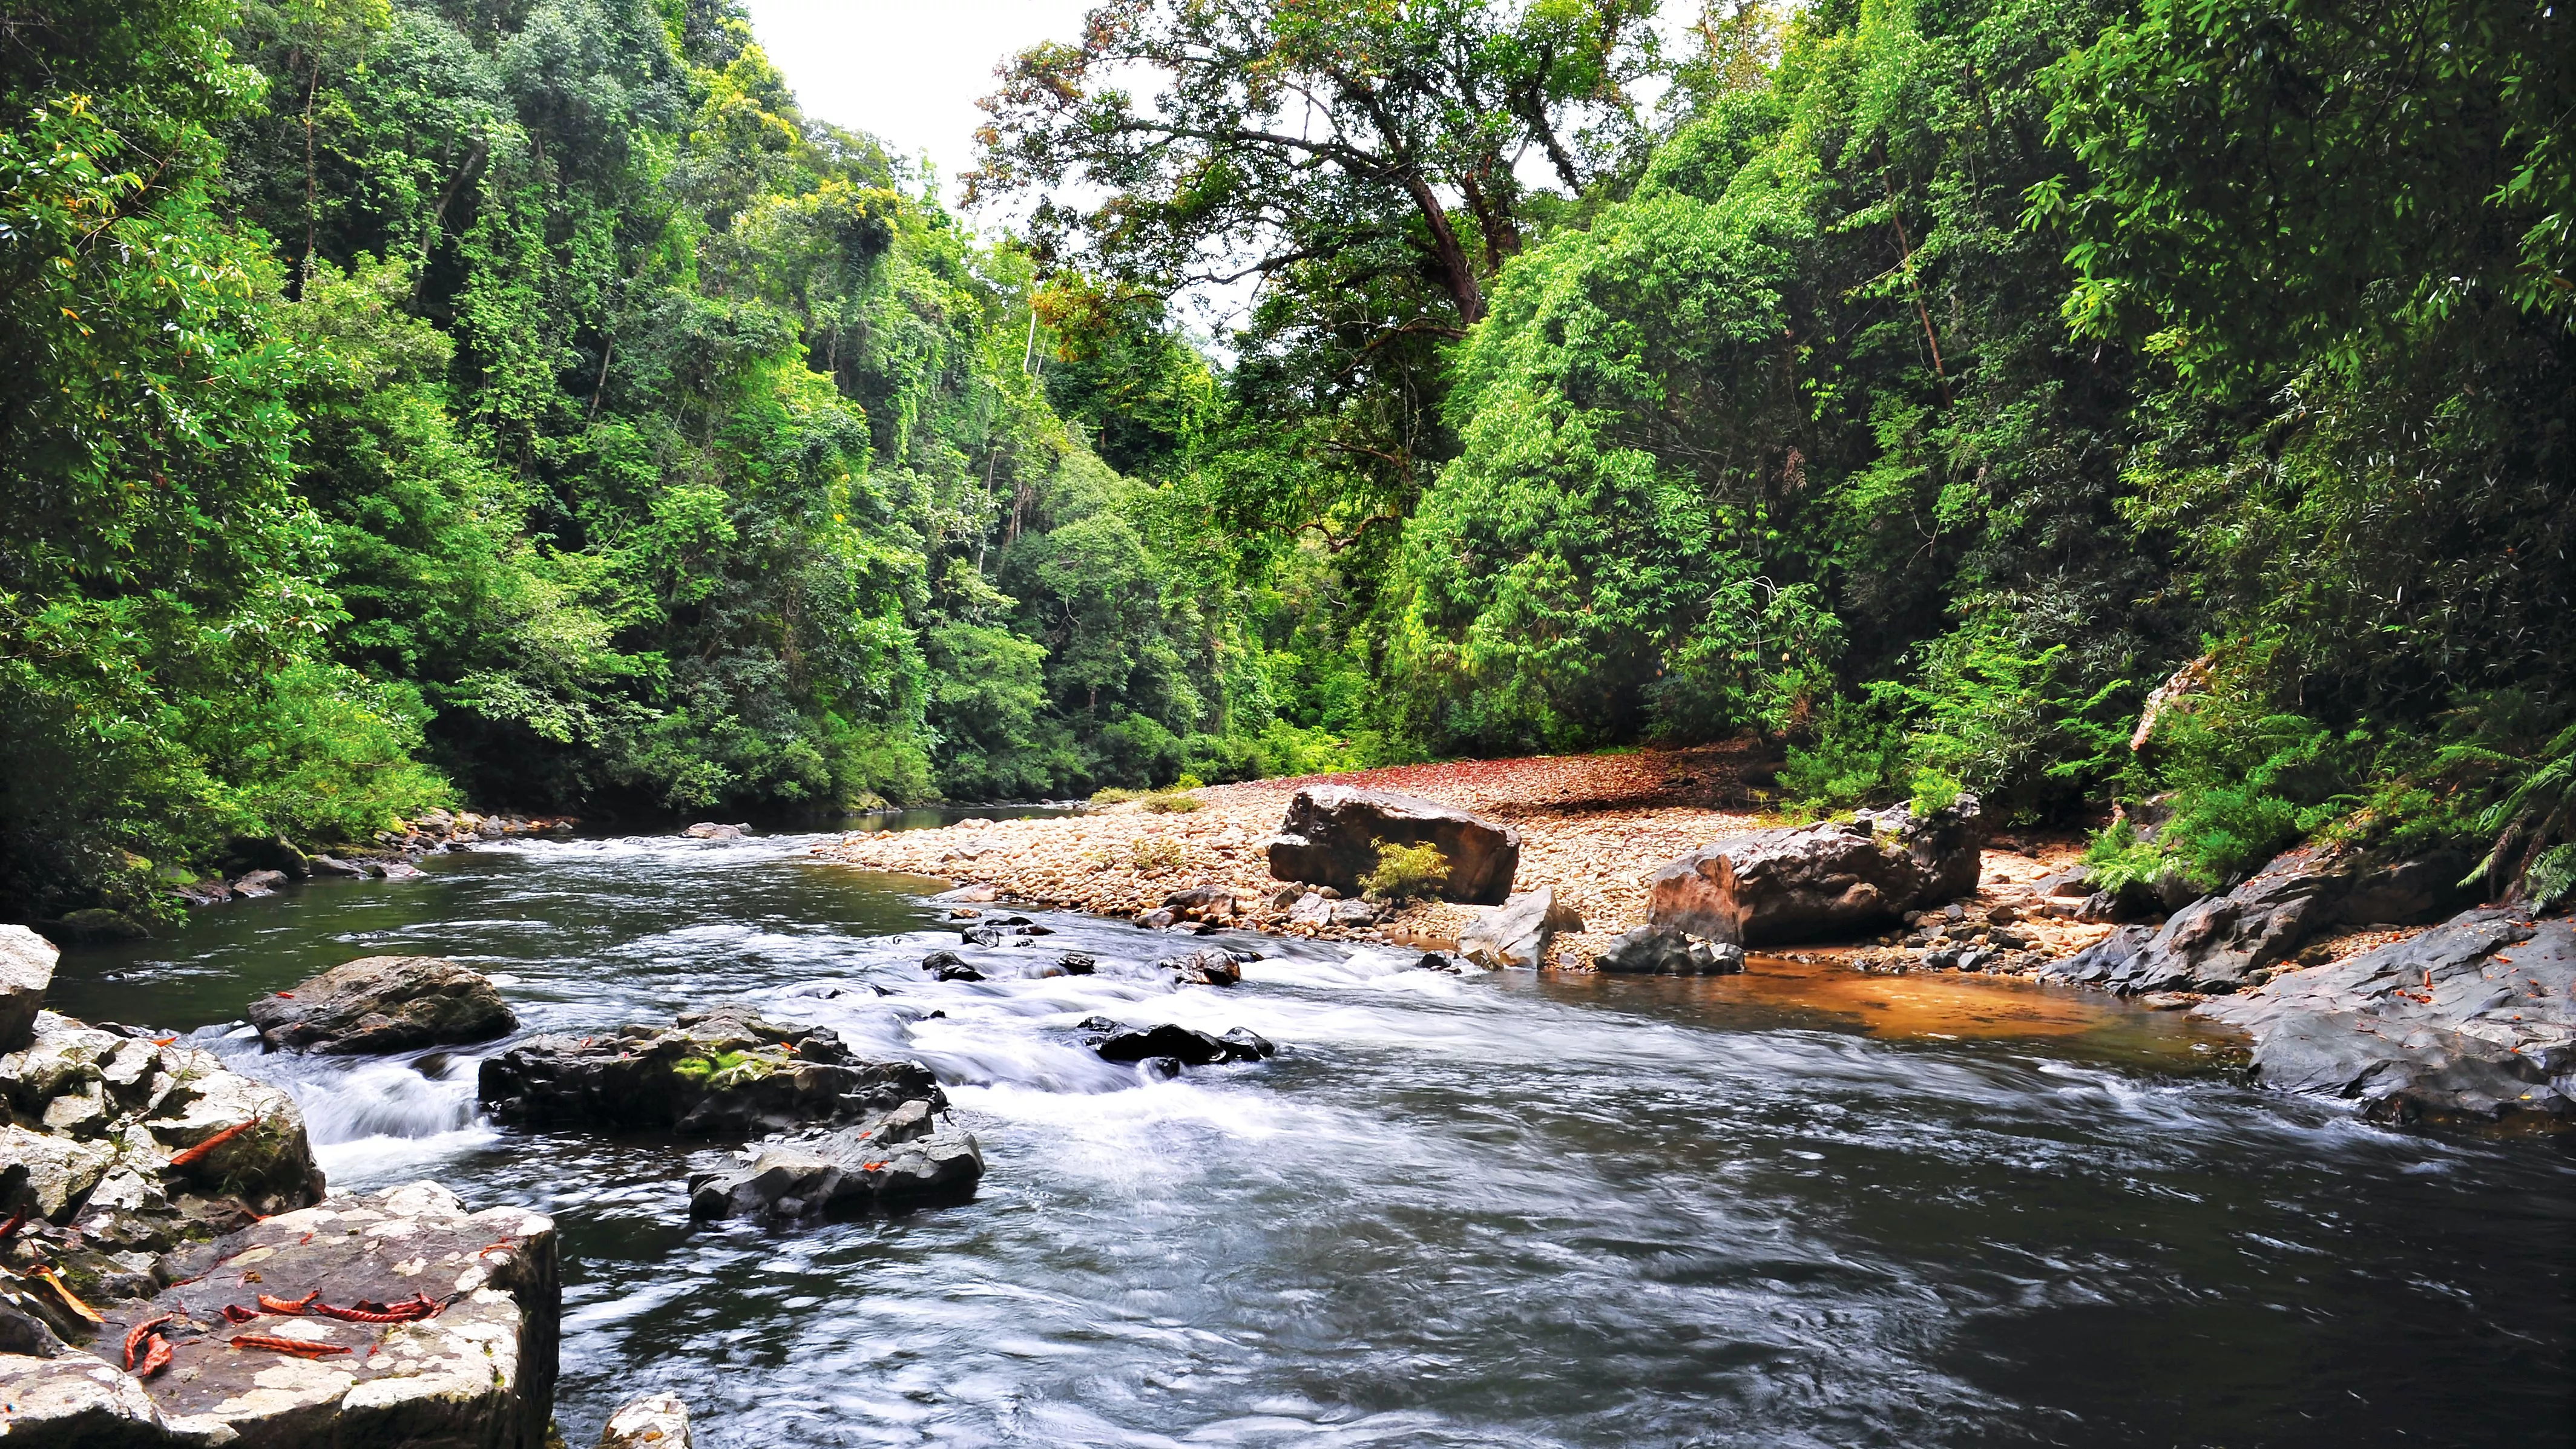 Taman Negara in Malaysia, East Asia | Trekking & Hiking - Rated 3.6